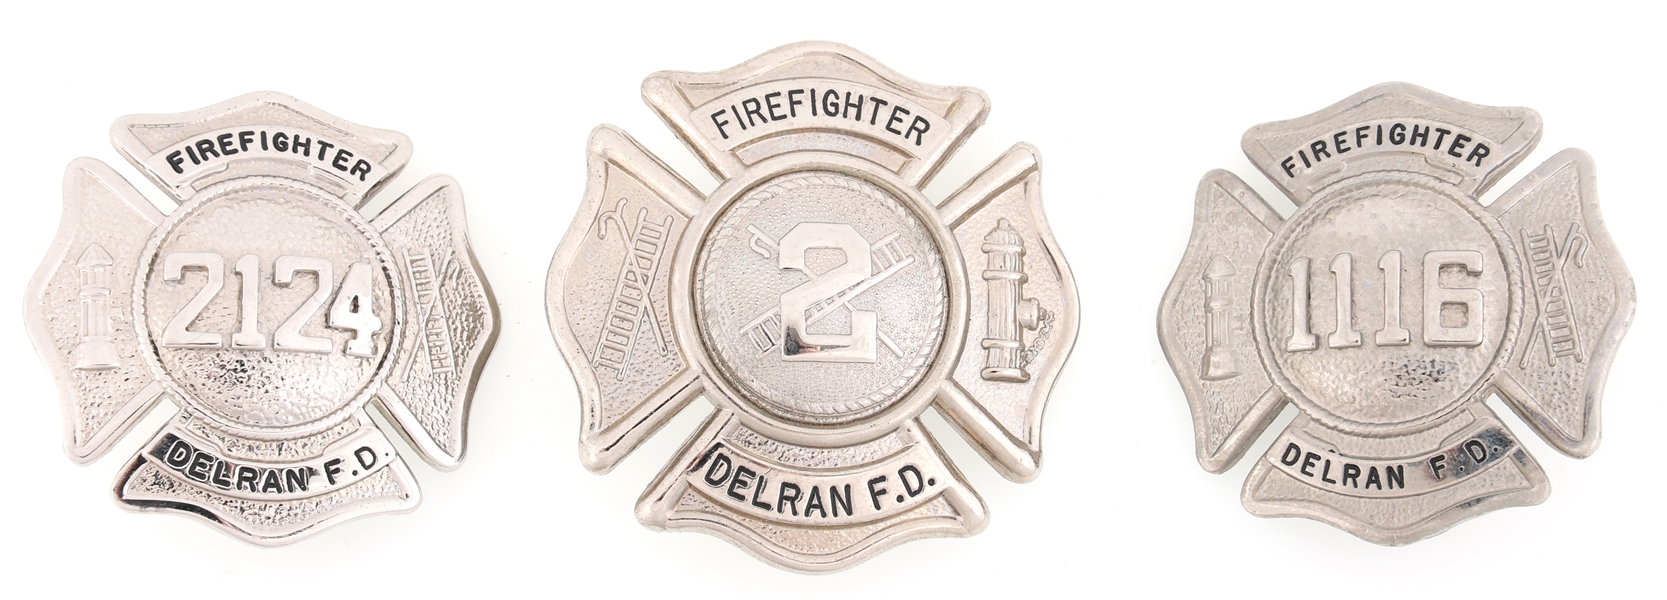 DELRAN NJ FIRE DEPARTMENT FIREFIGHTER BADGES LOT OF 3